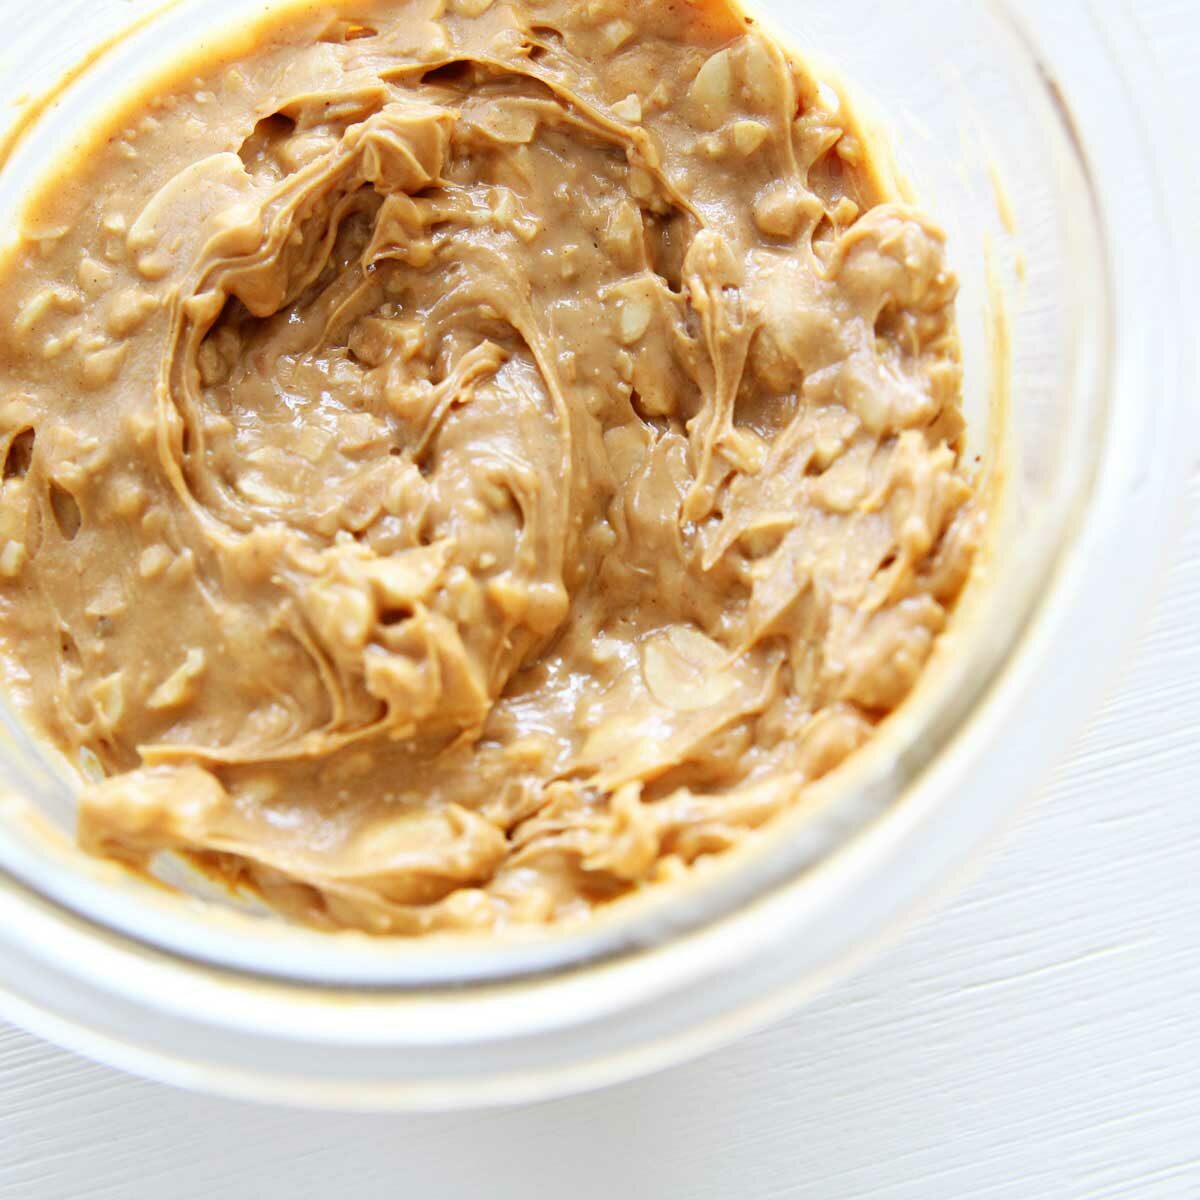 ingredient - crunchy peanut butter filling